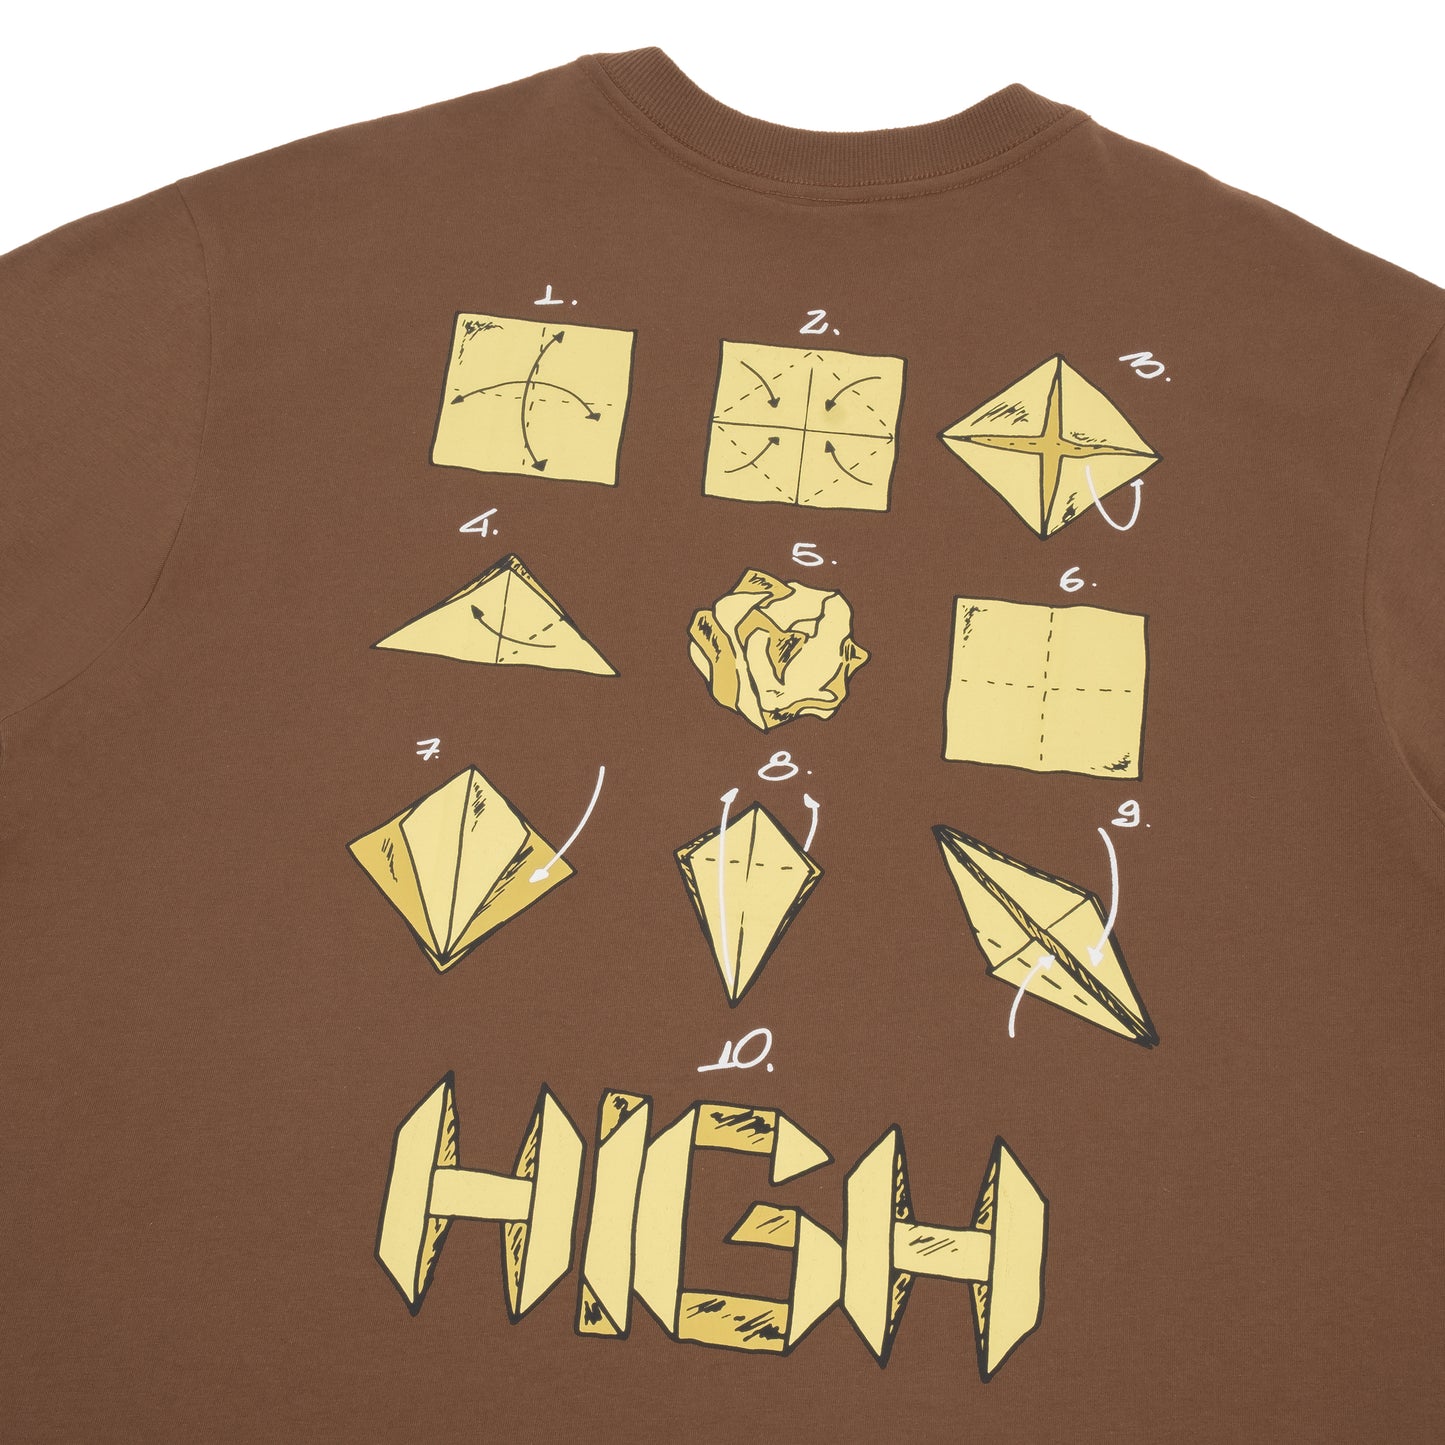 HIGH - Camiseta Origami Brown